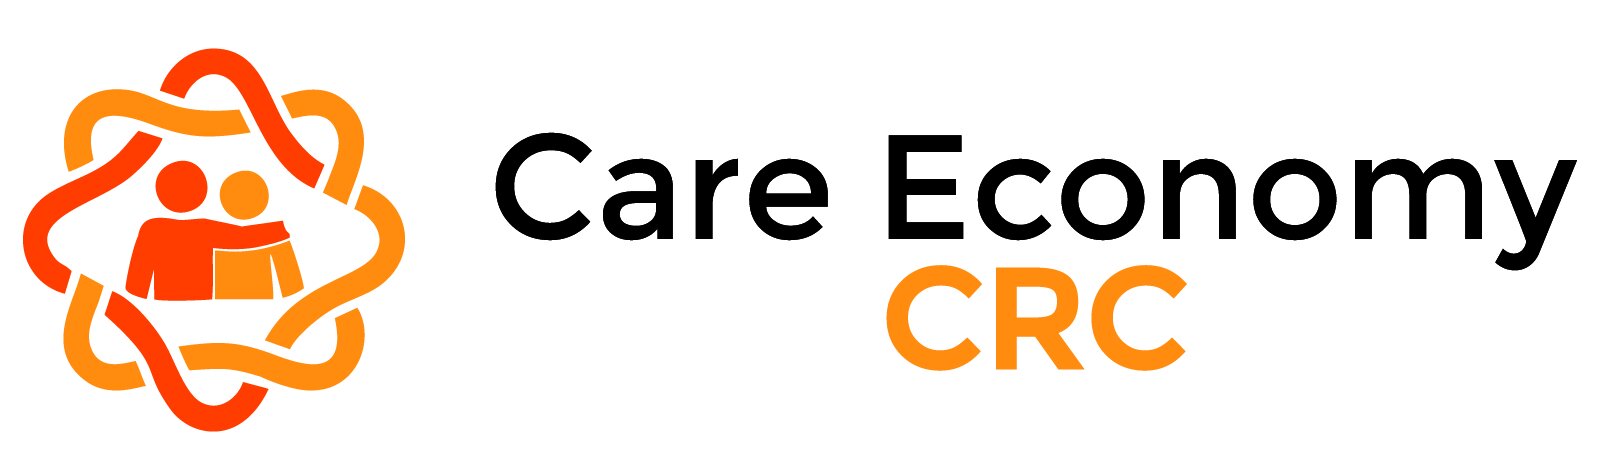 Care Economy CRC